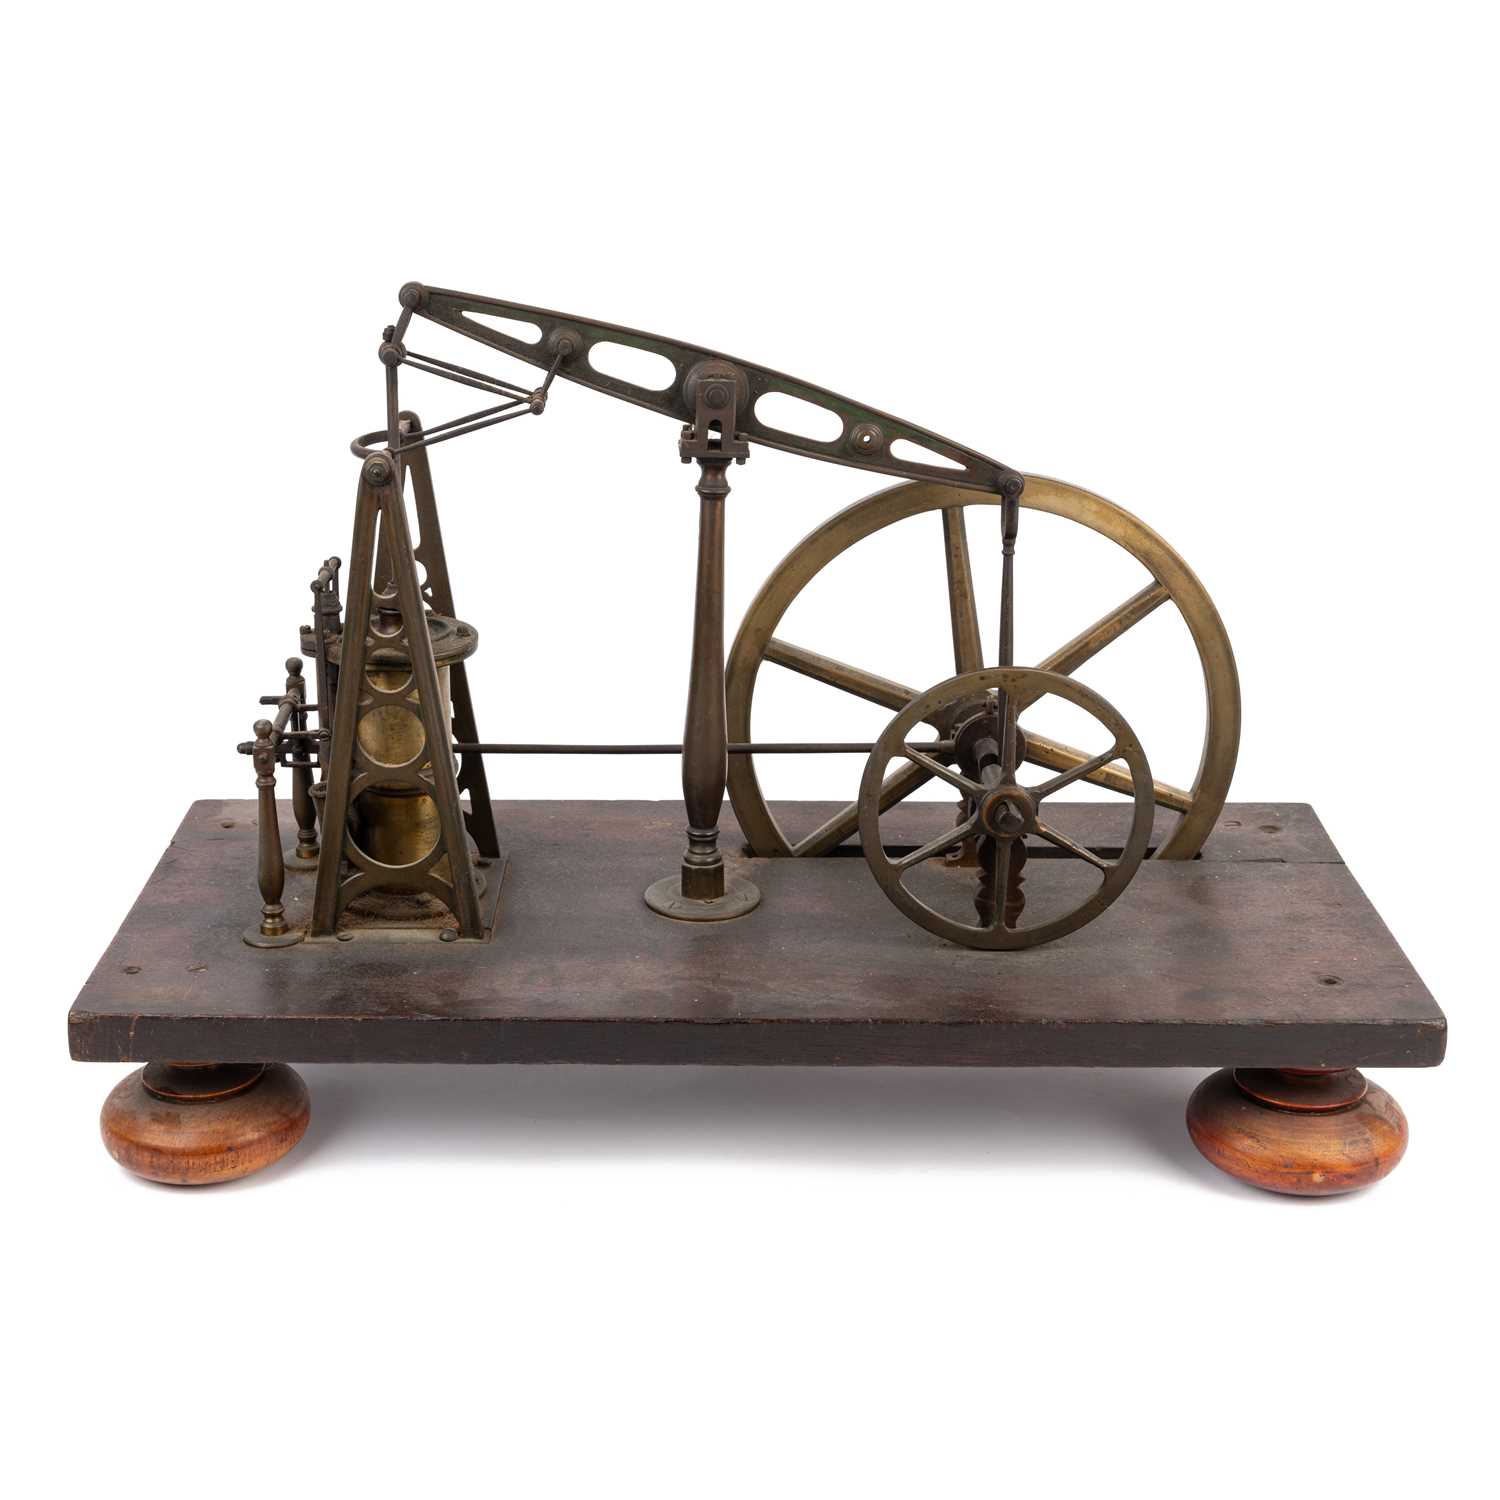 Lot 12 - A 19th century model steam engine